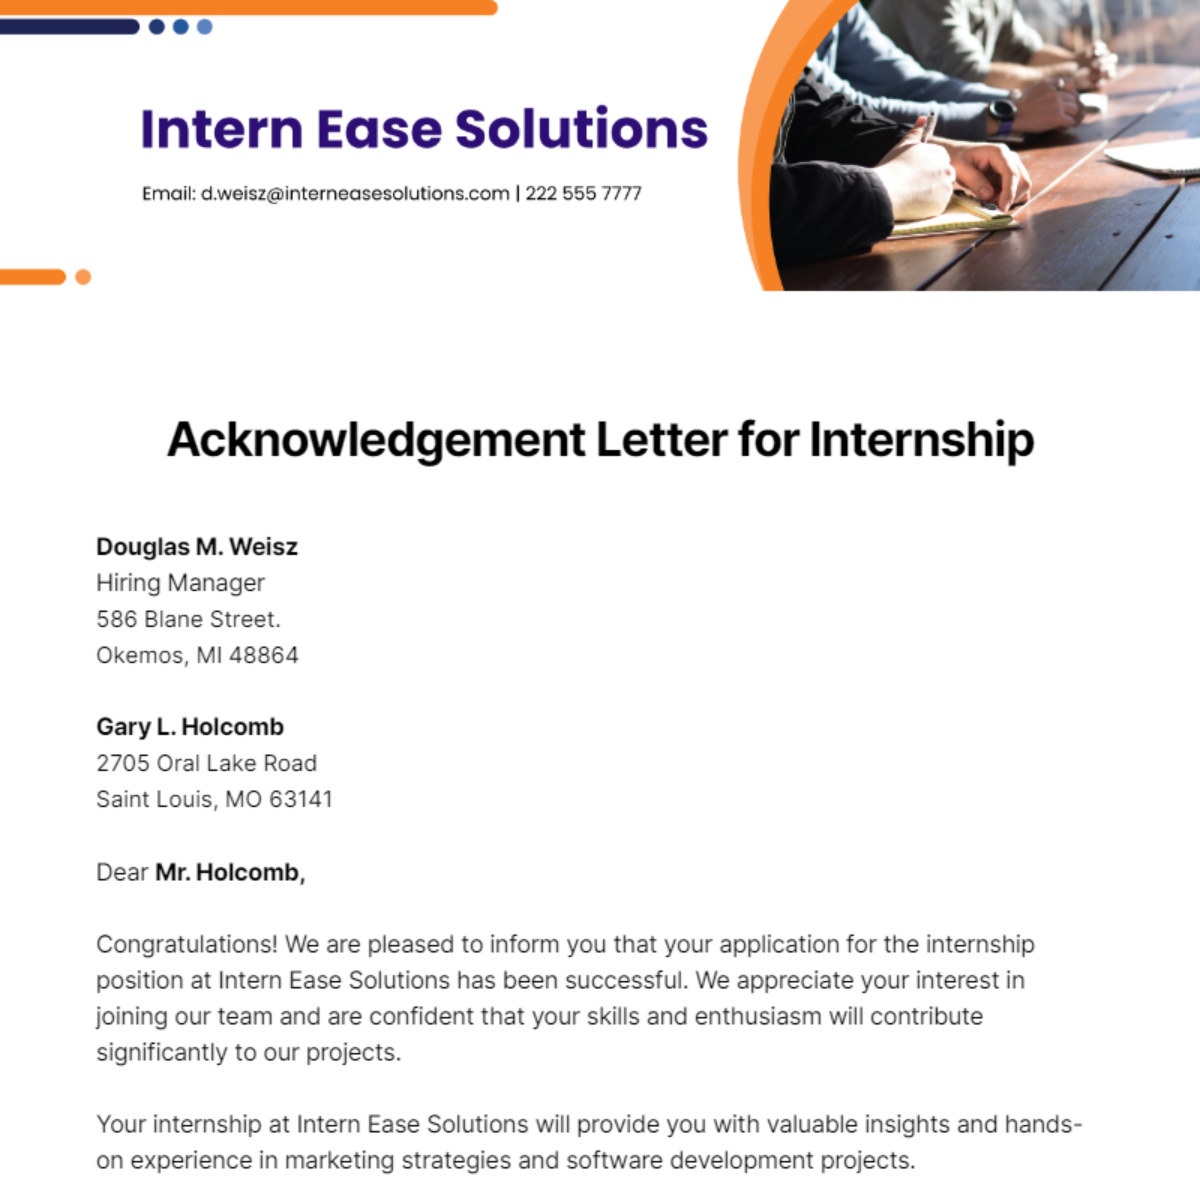 Acknowledgement Letter for Internship Template